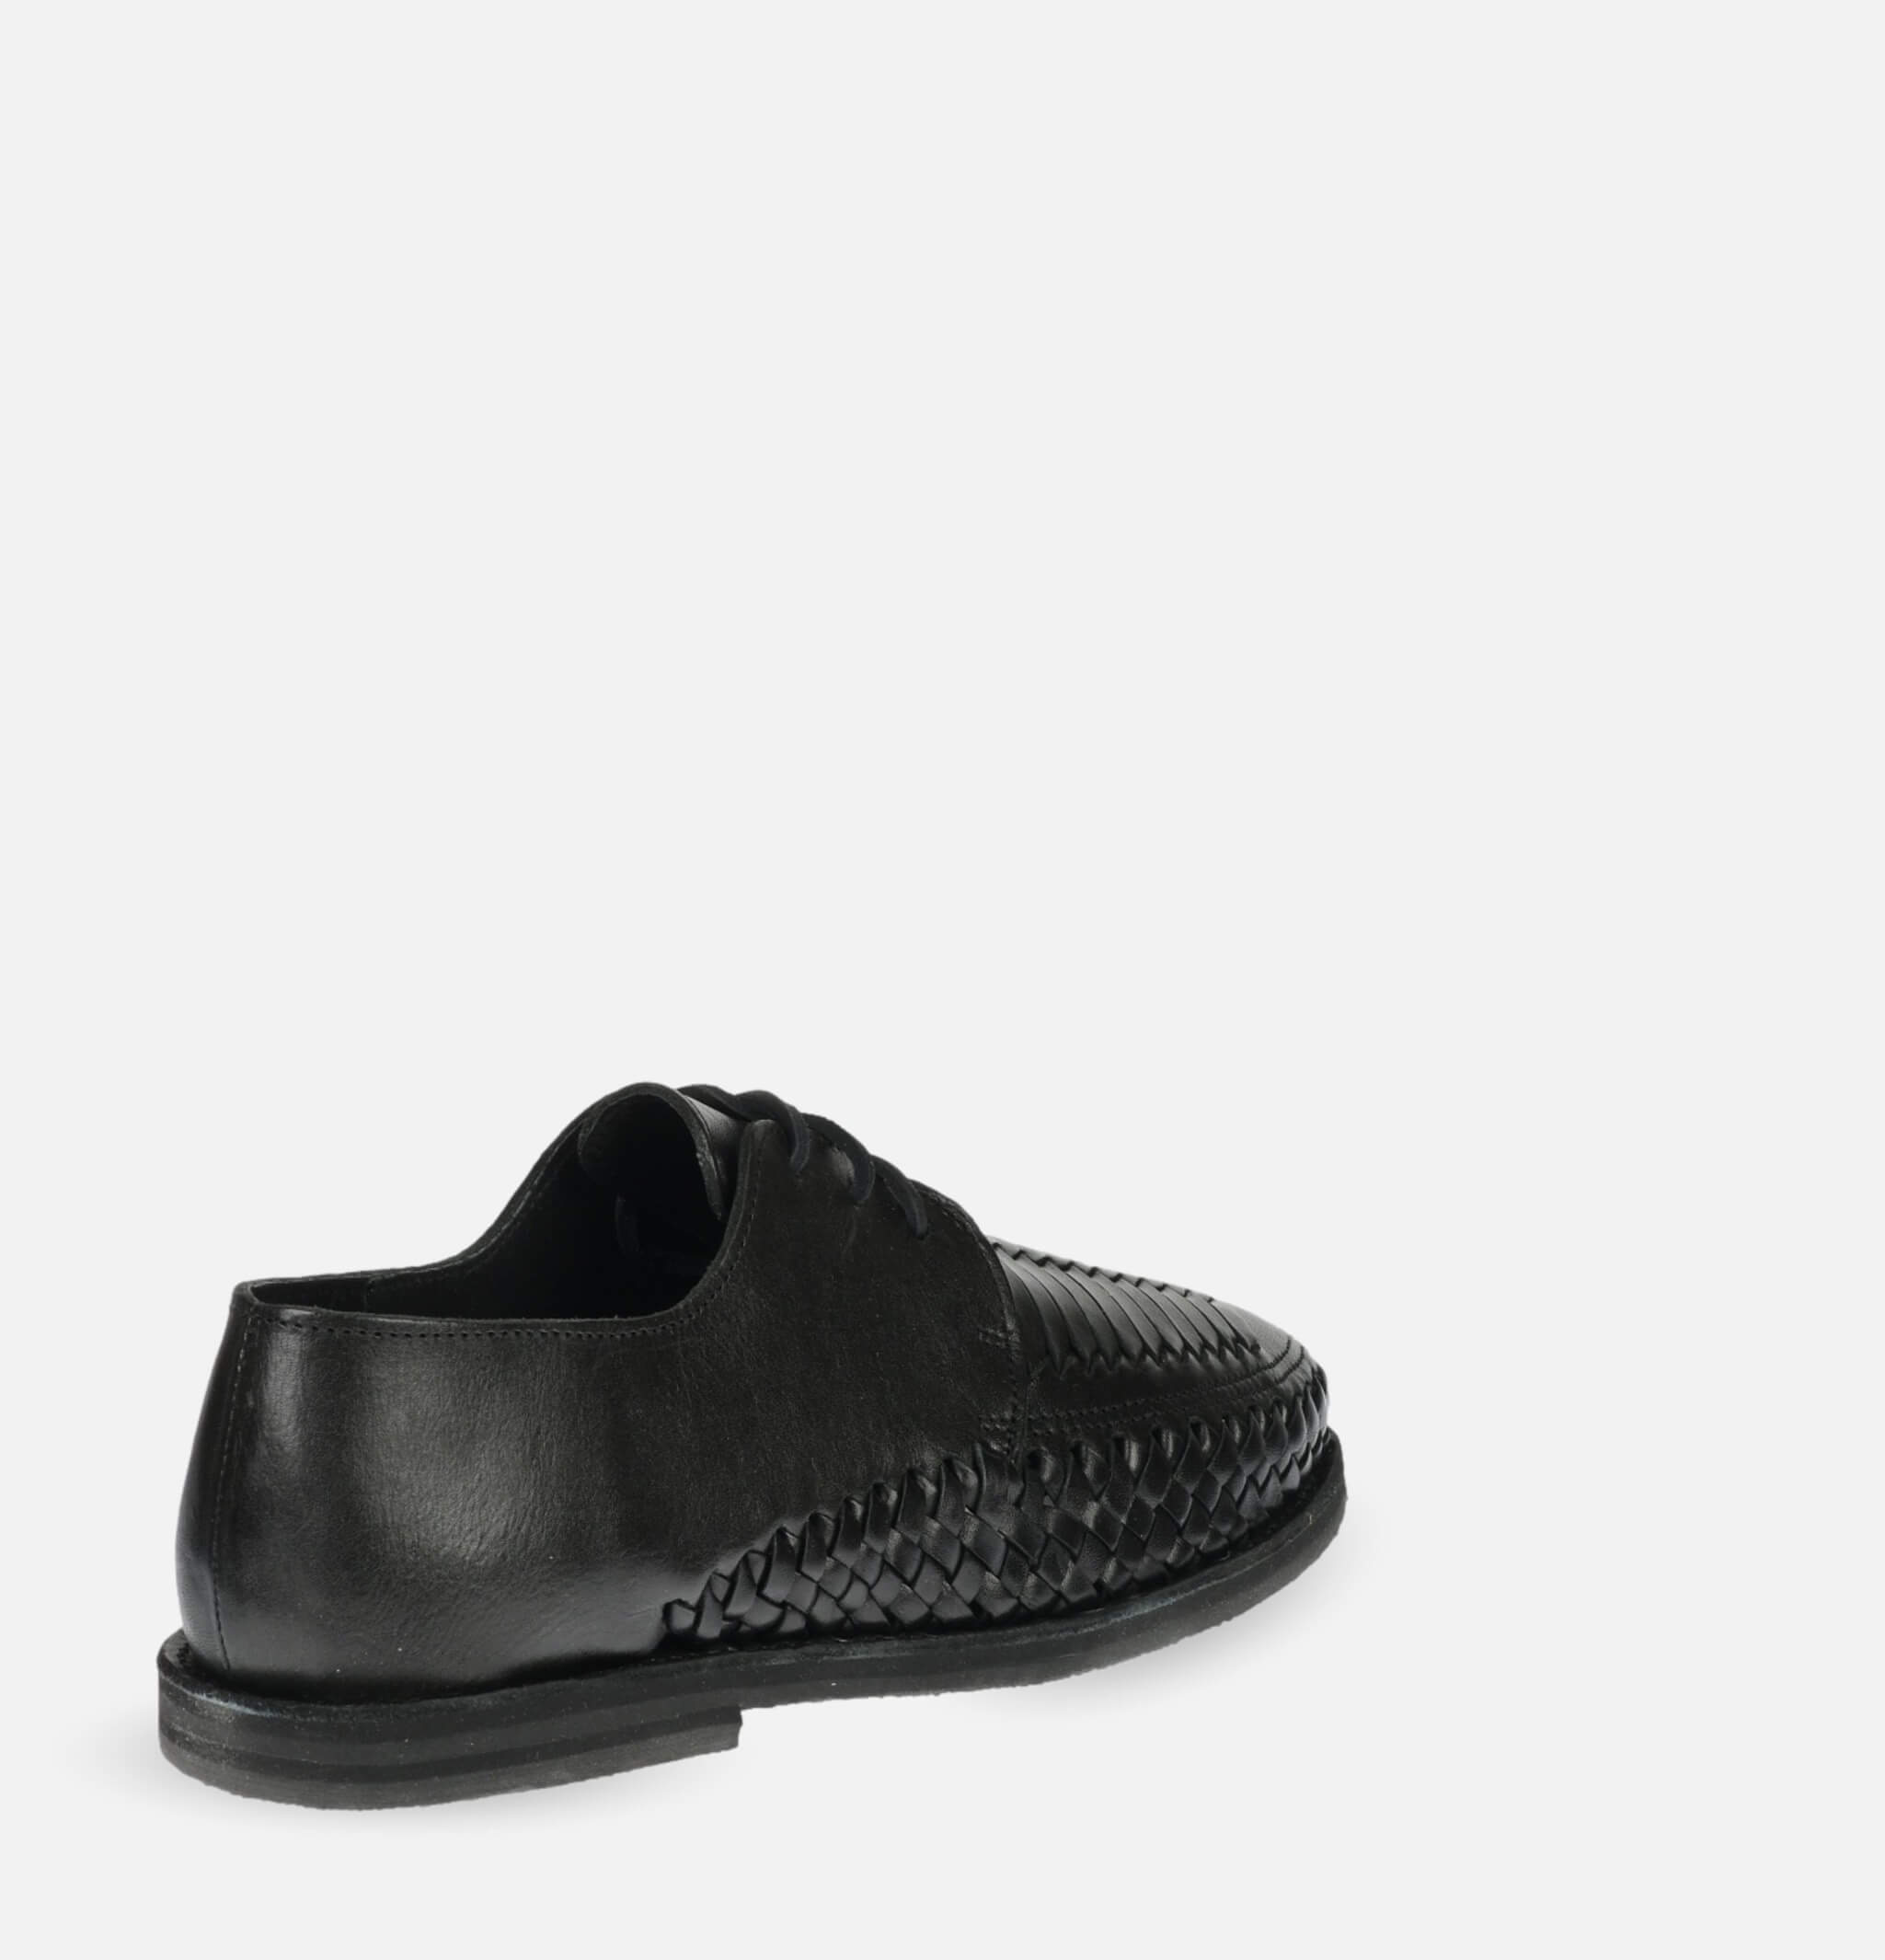 Veracruz Shoes Black